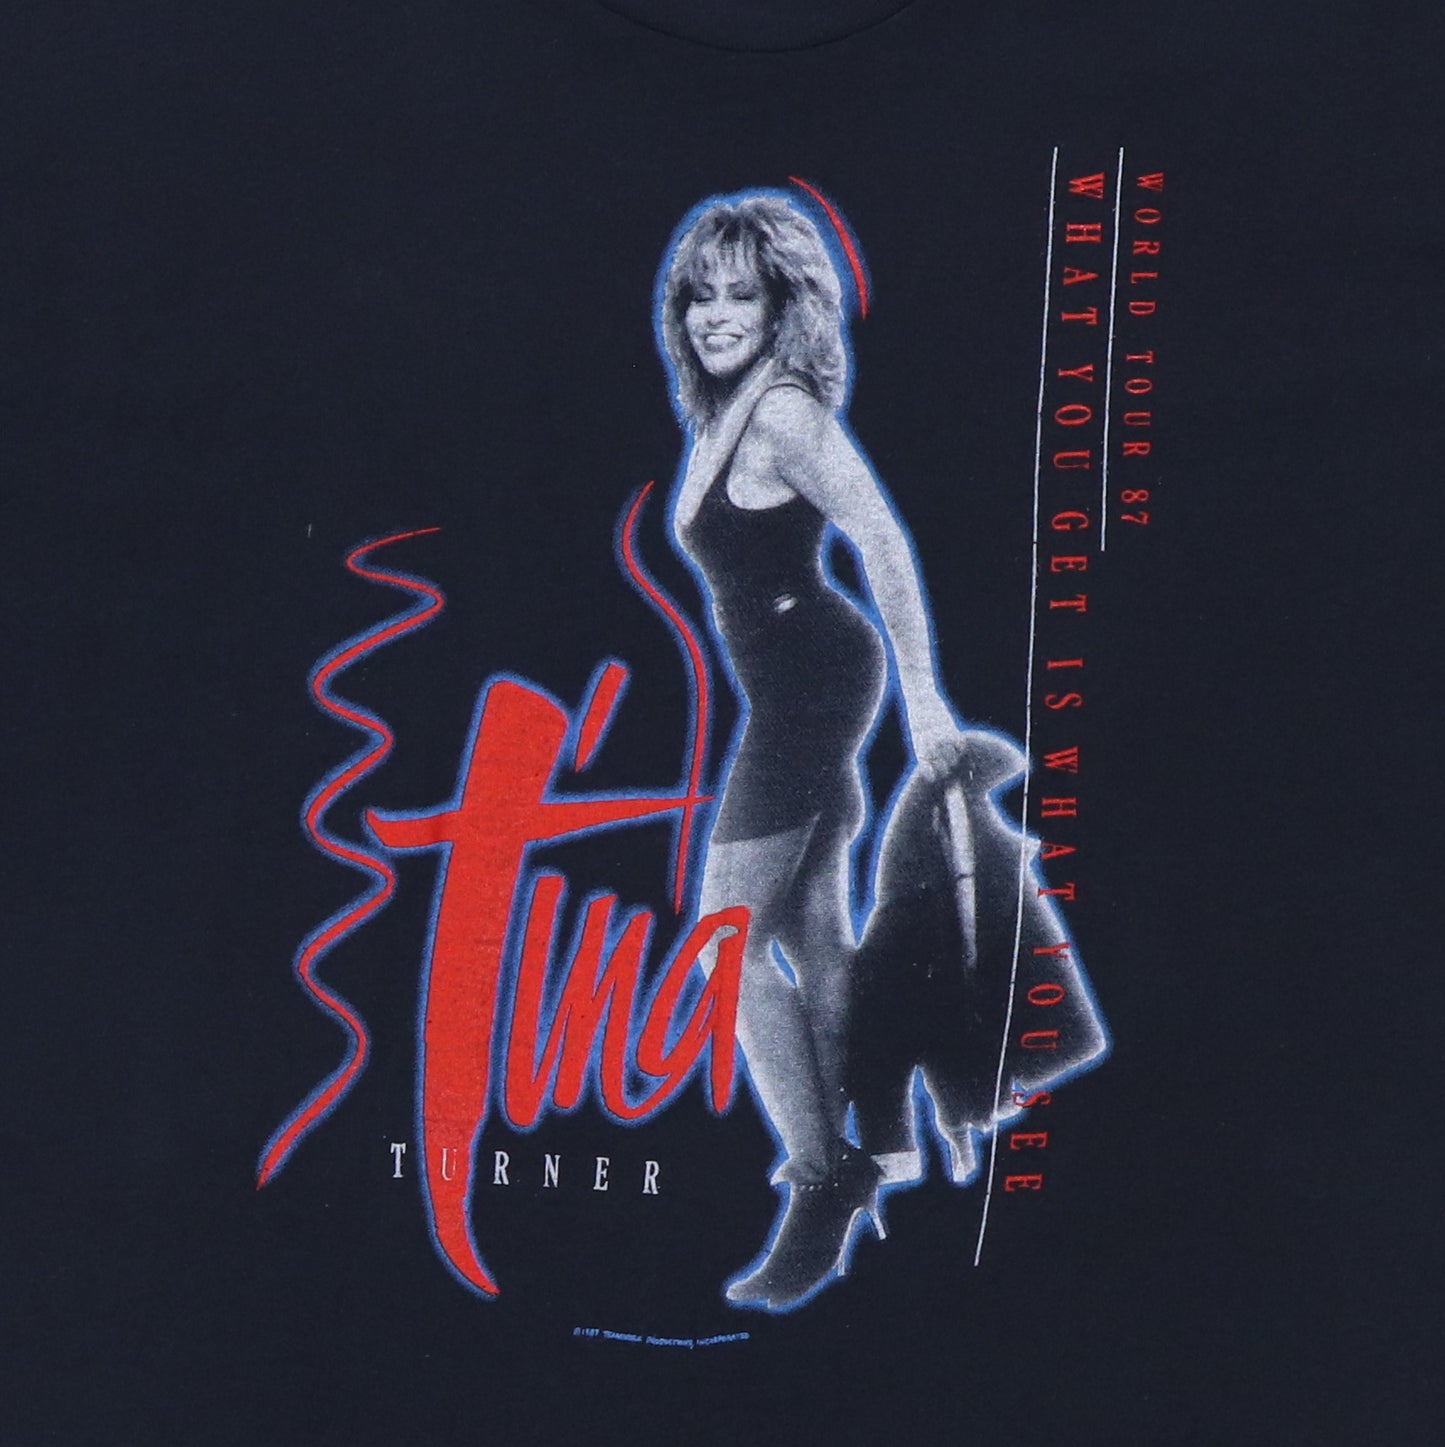 1987 Tina Turner Break Every Rule Tour Shirt